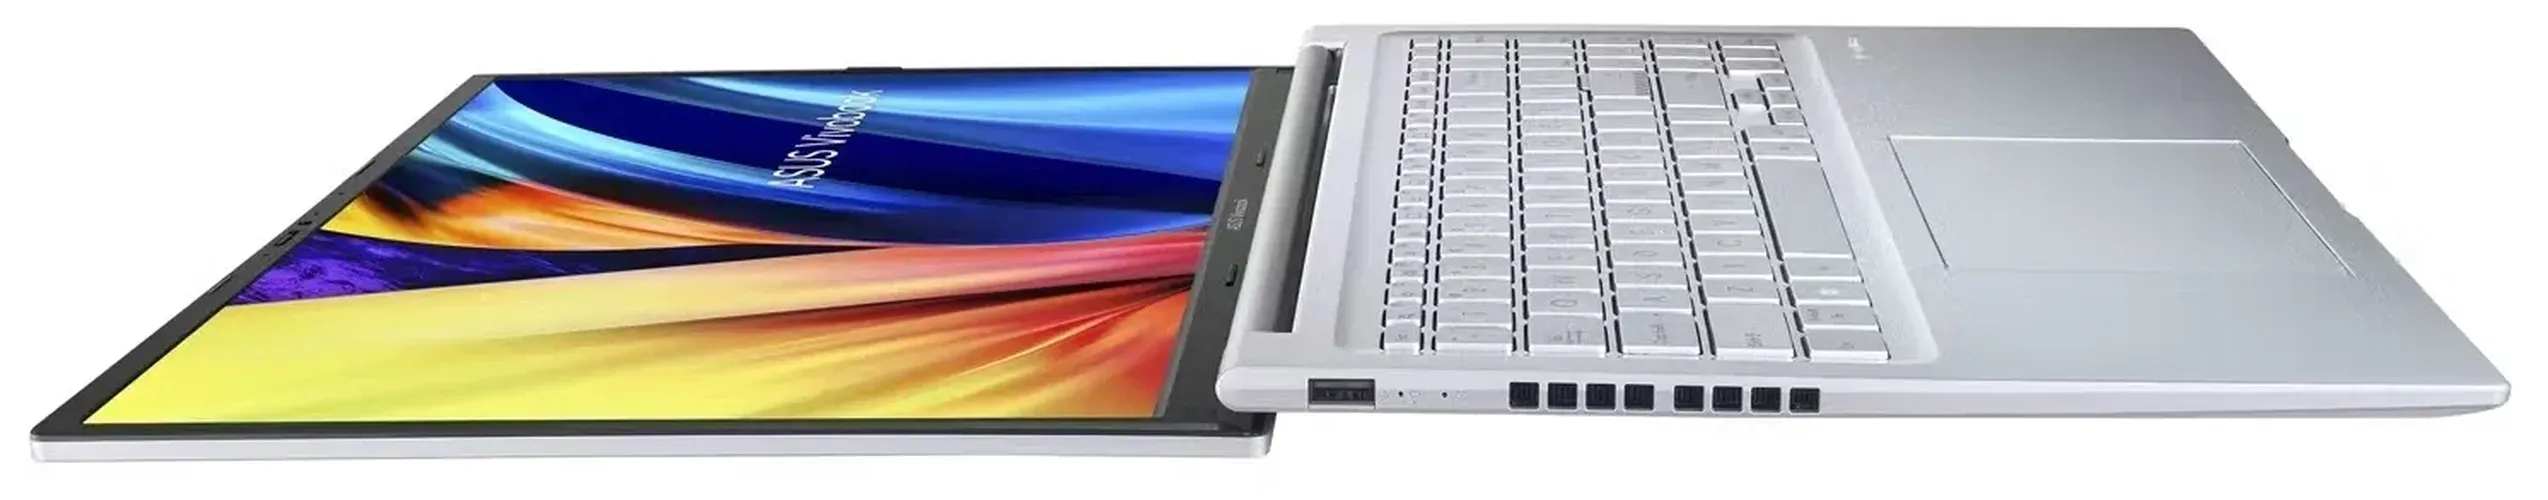 Ноутбук Asus VivoBook Pro 16 i5-12500H, 512 GB SSD, 16 GB DDR4, купить недорого